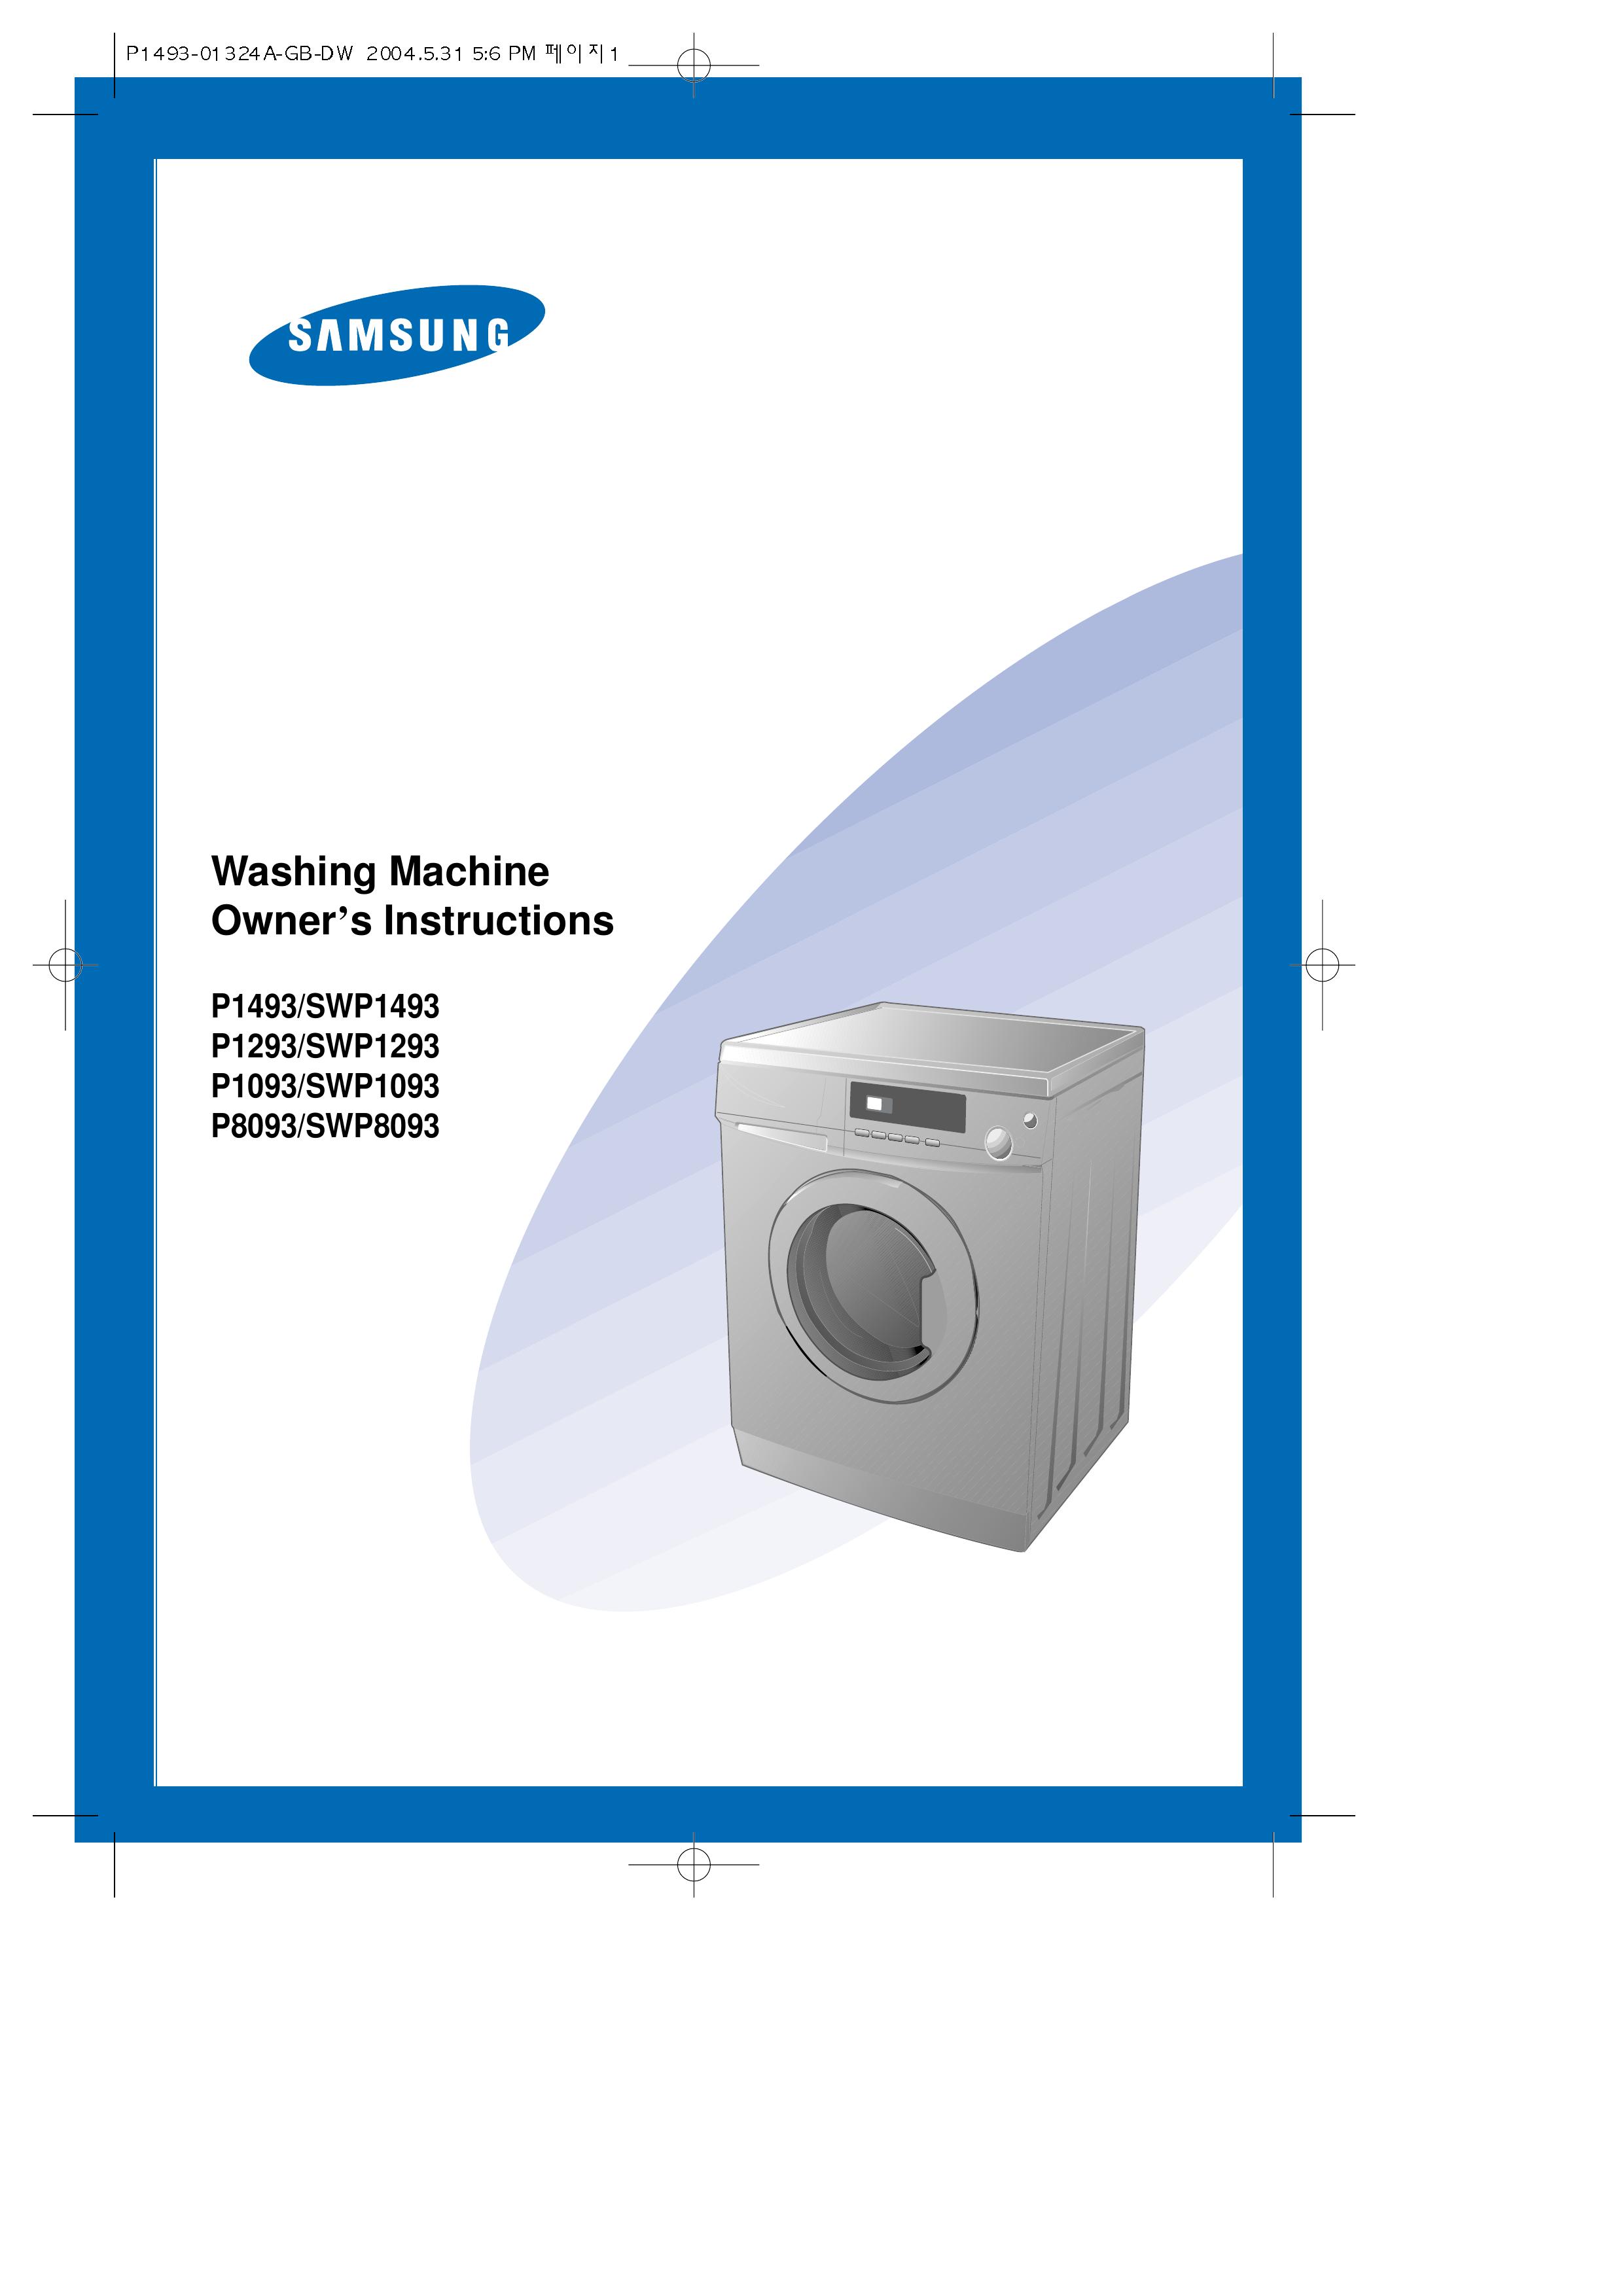 Samsung P1093 Washer/Dryer User Manual